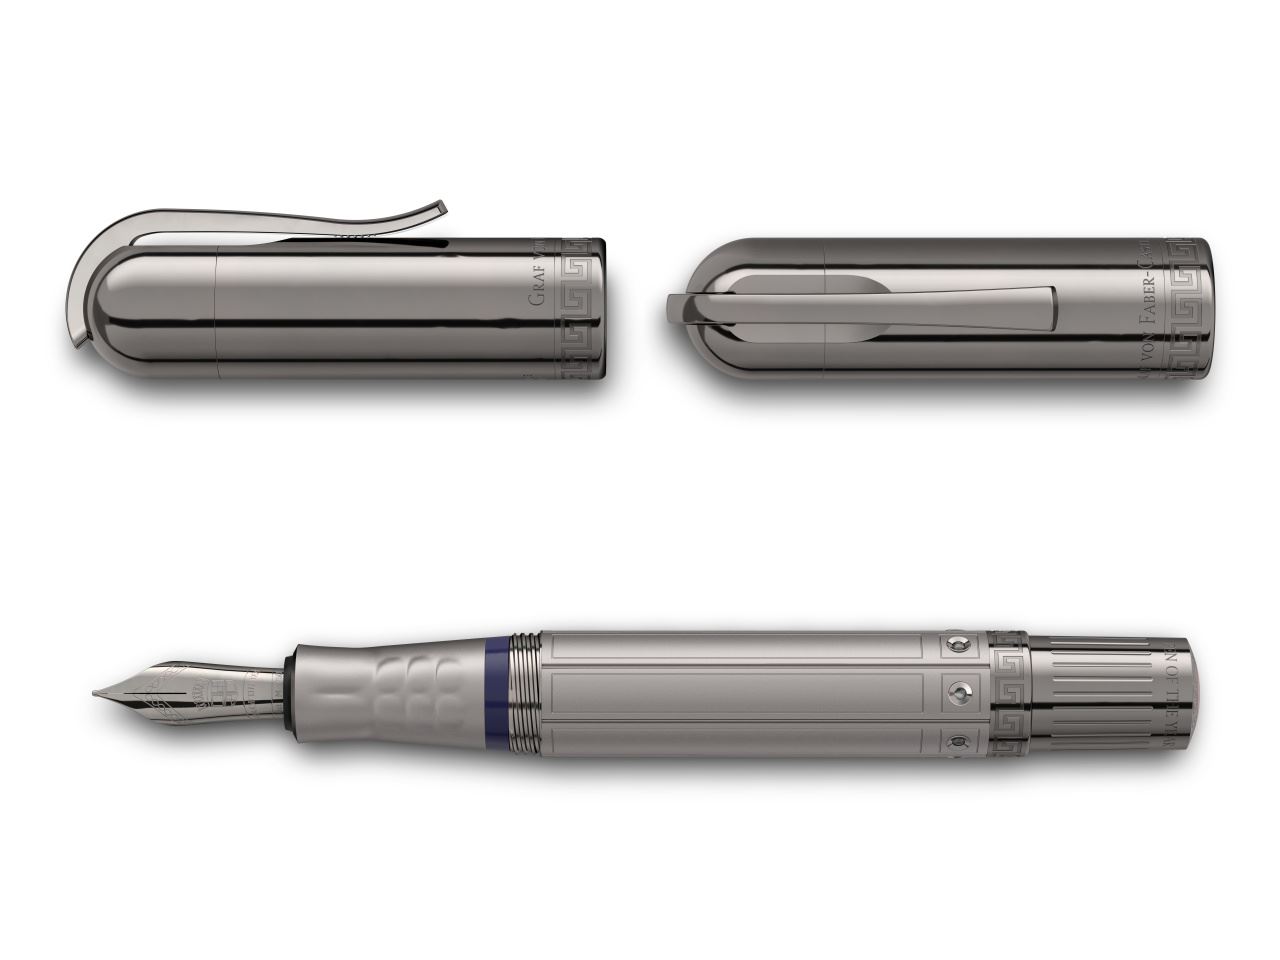 Graf-von-Faber-Castell - Fountain pen Pen of the Year 2020 Ruthenium, Broad